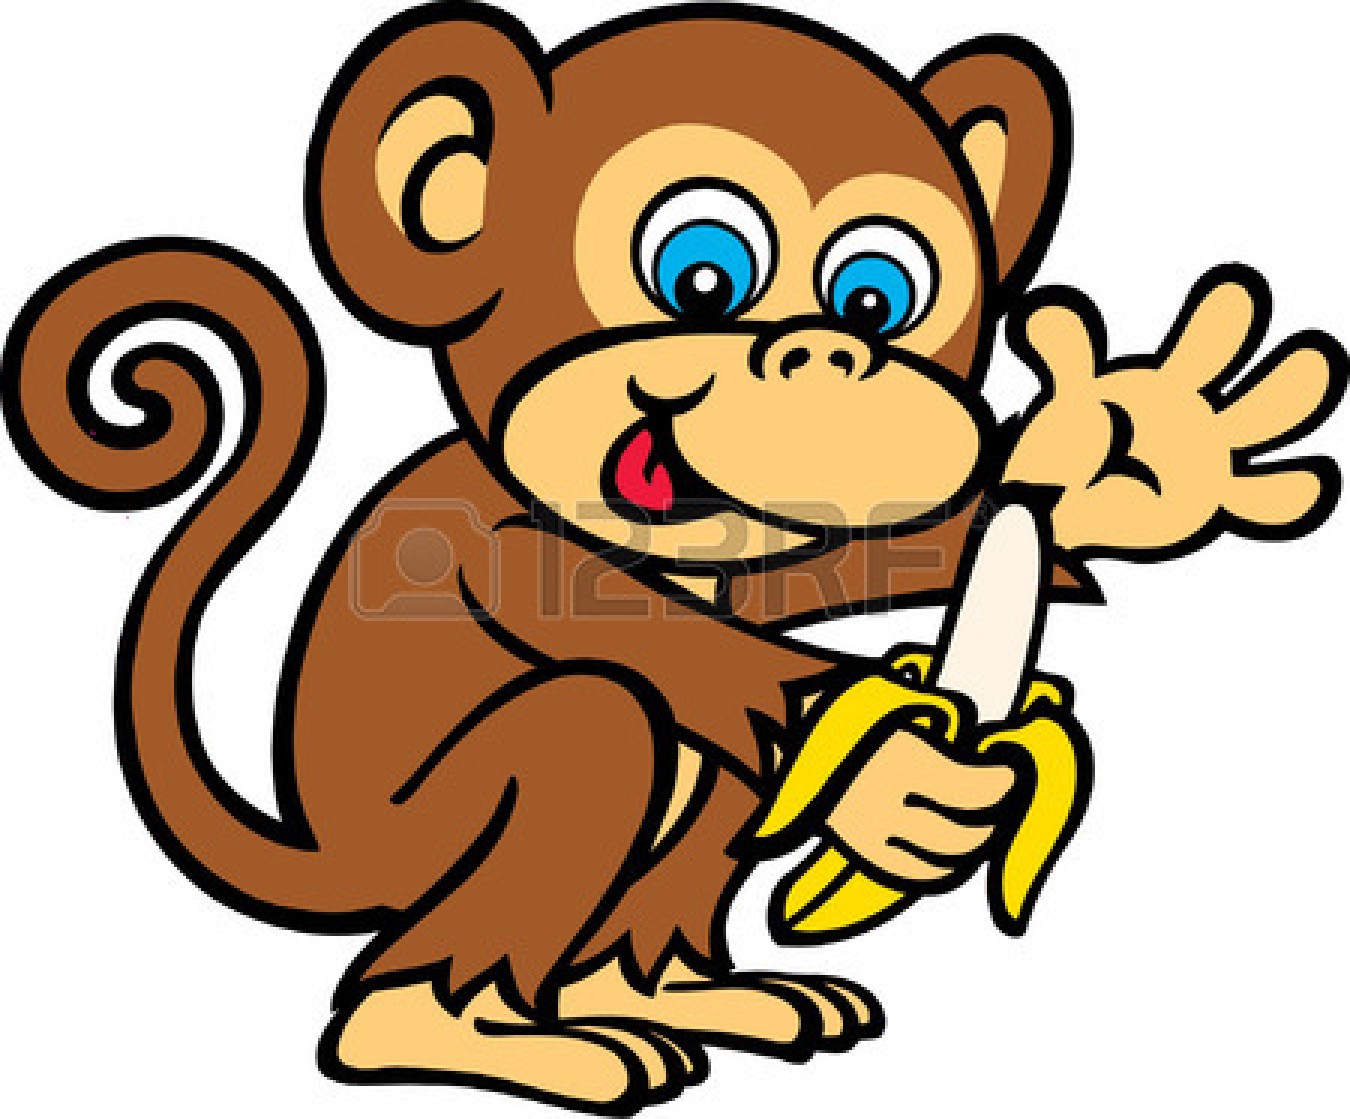 microsoft clip art monkey - photo #43